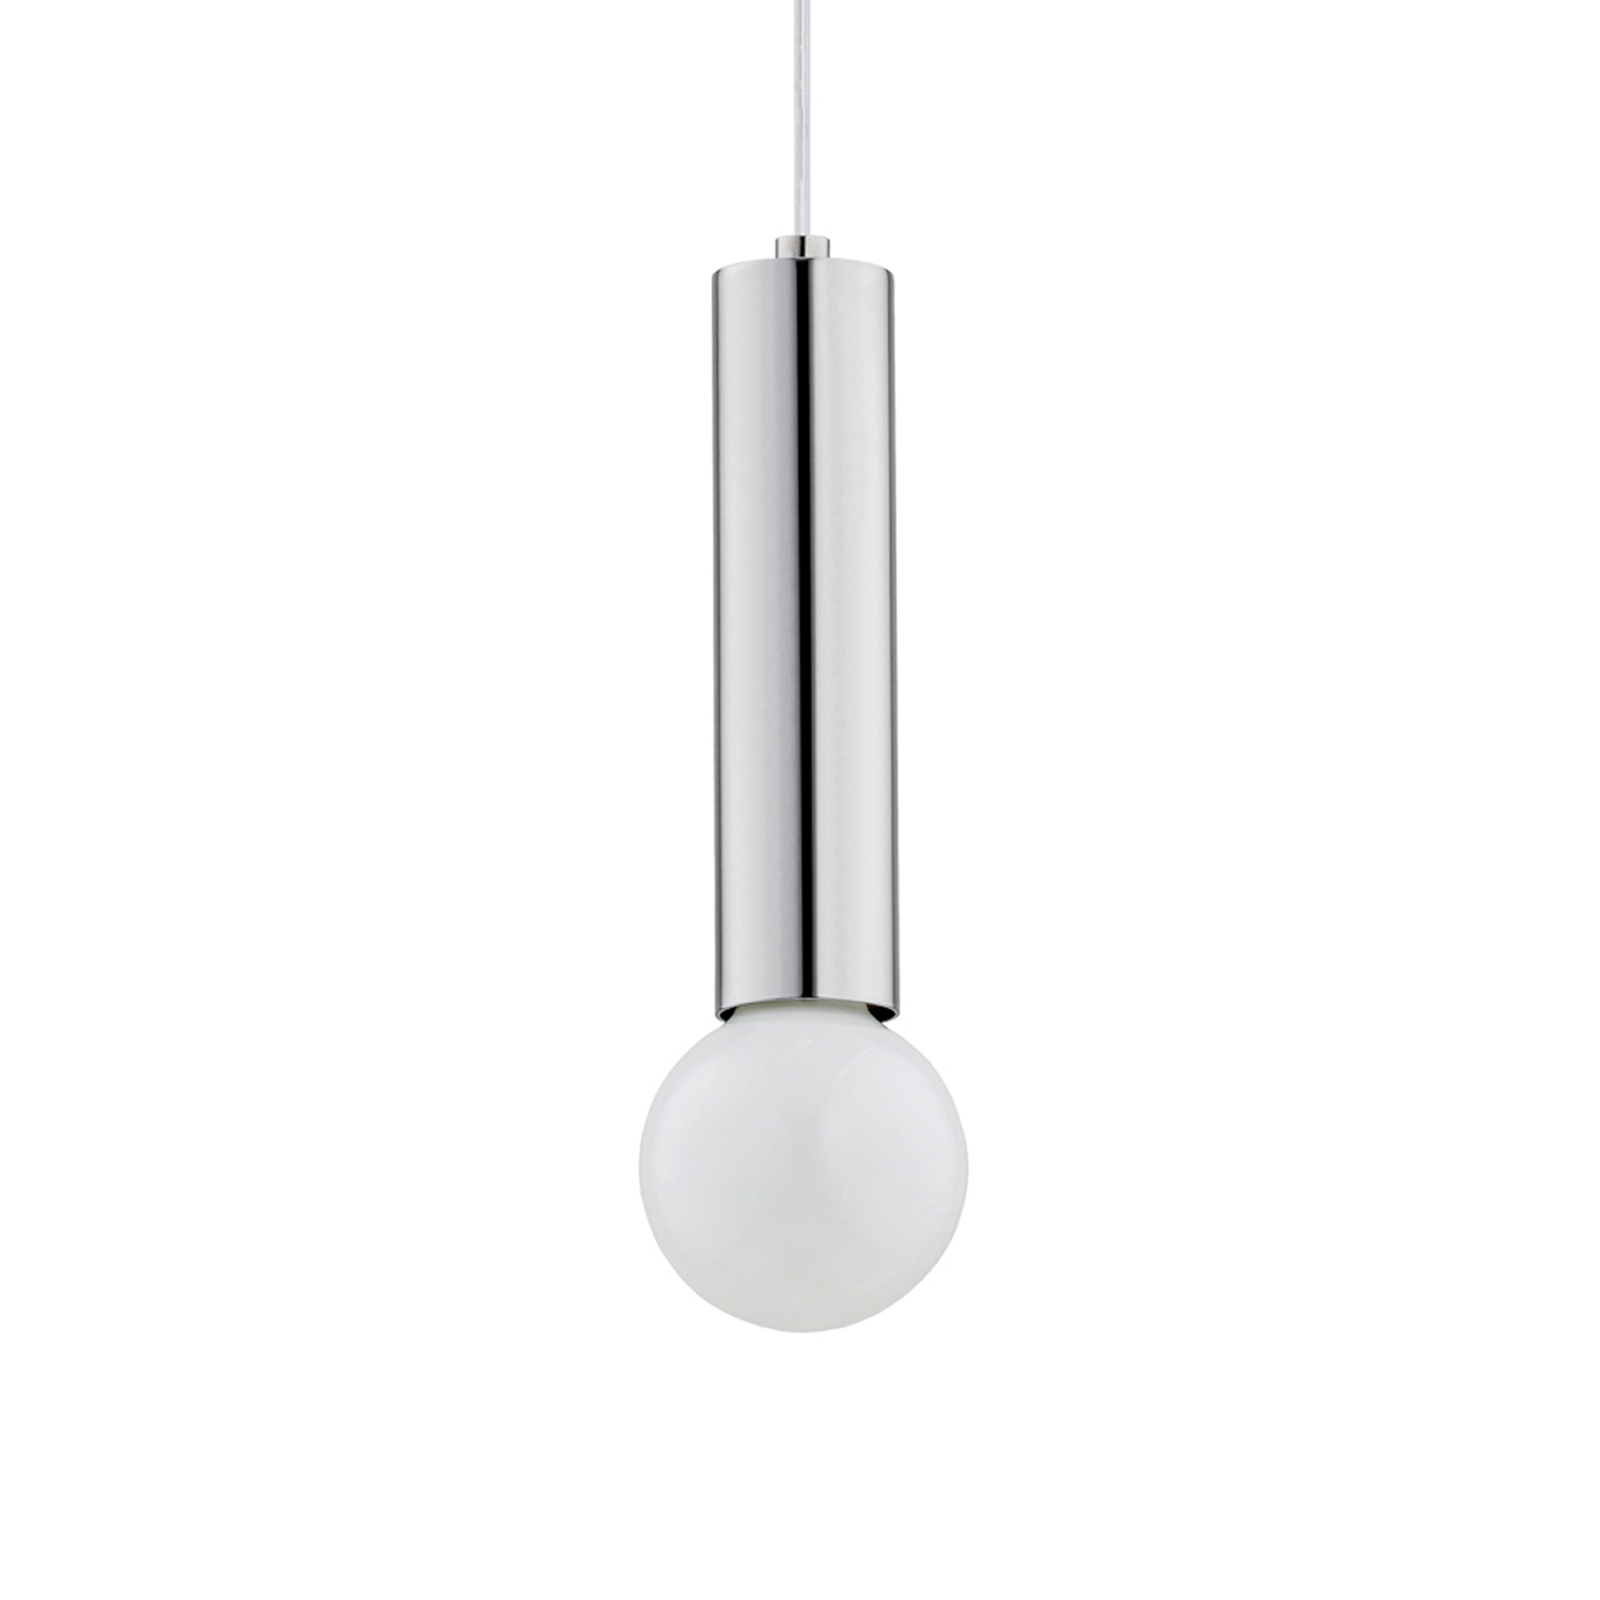 Jazz pendant light, one-bulb, chrome